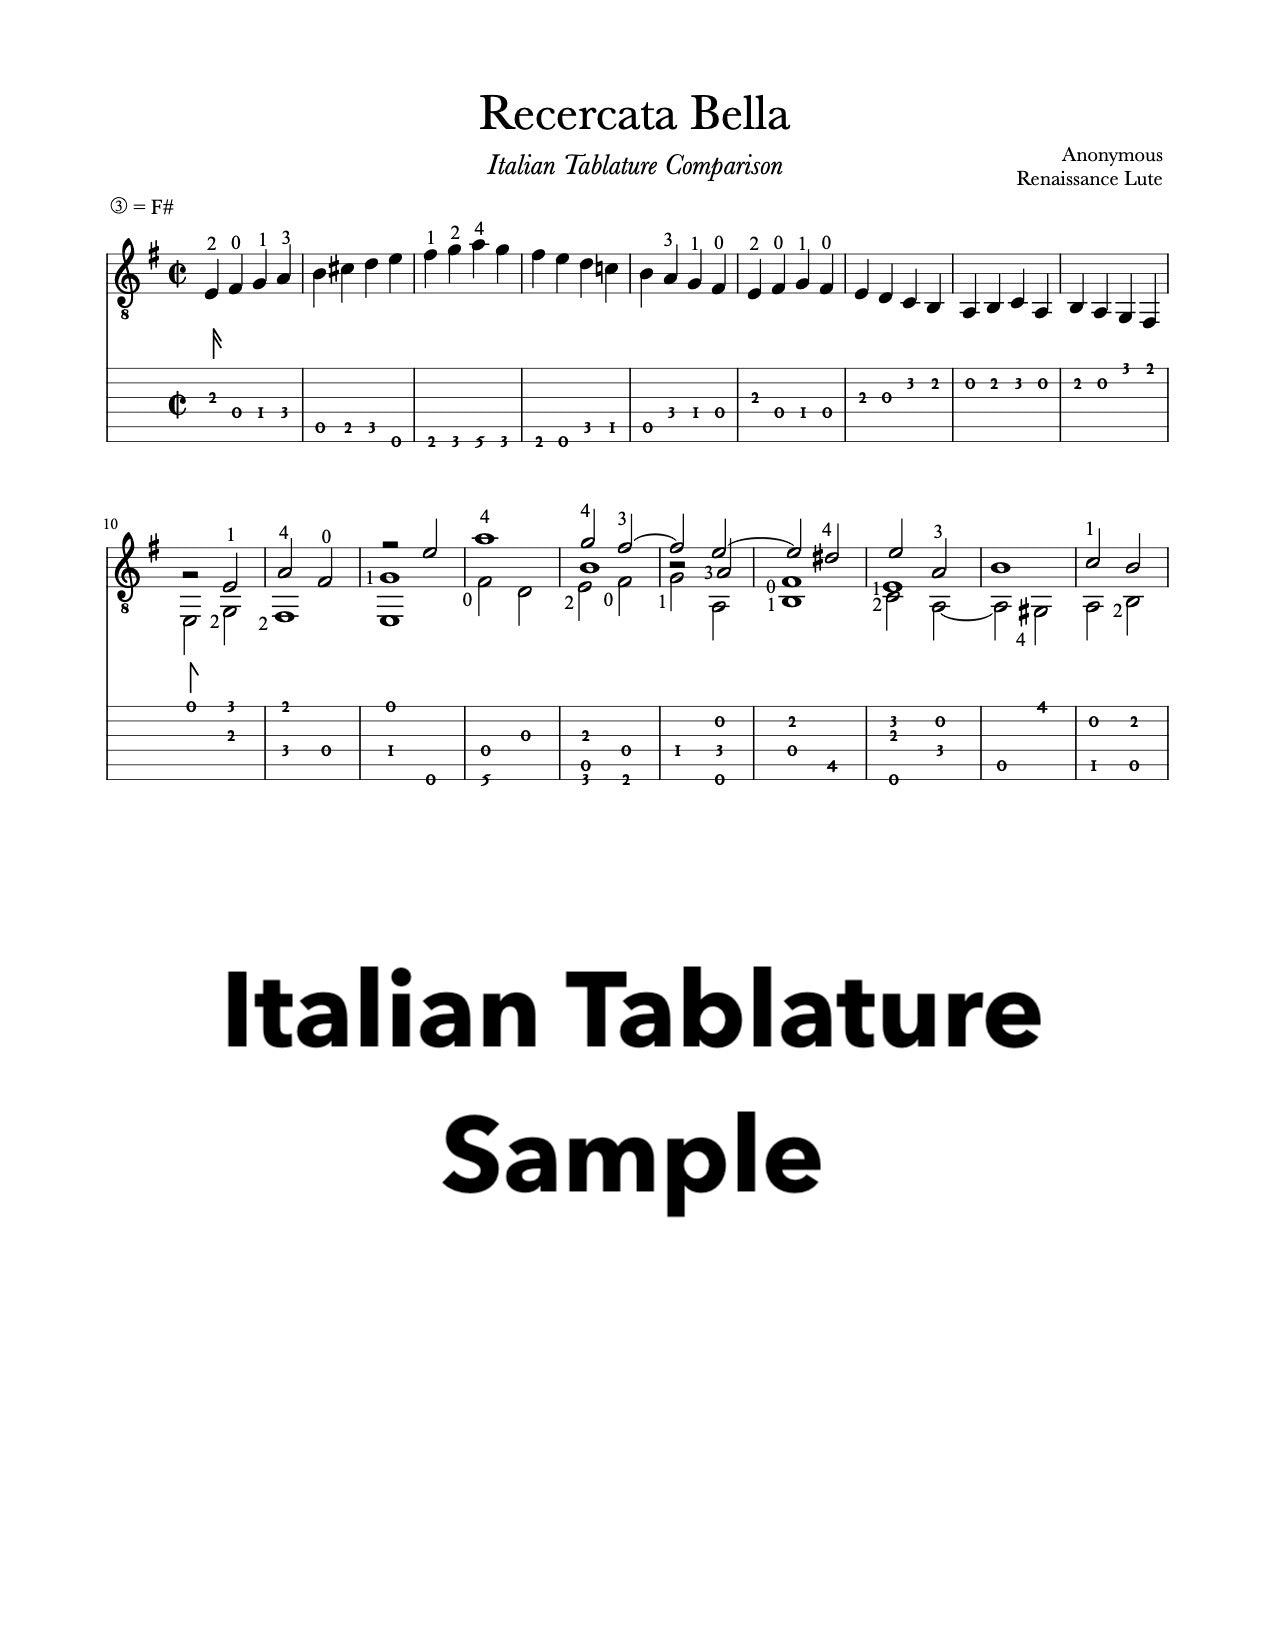 Recercata Bella - Italian Tablature Sample